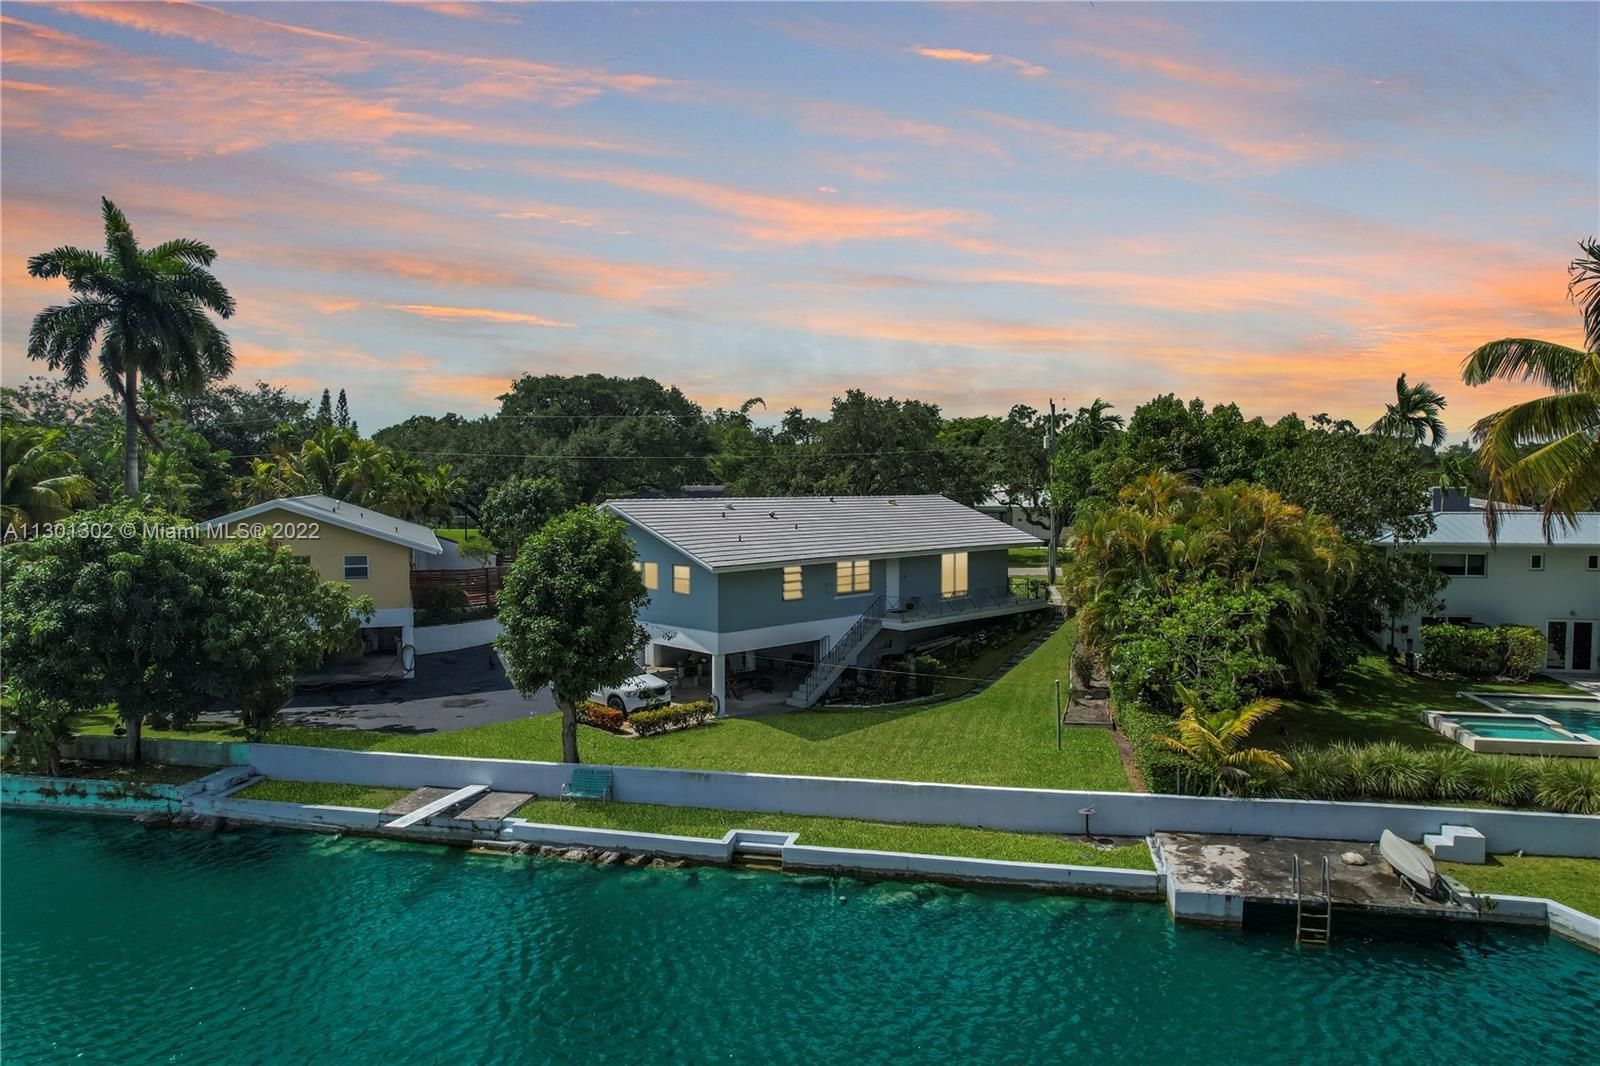 Miami Shores Lakefront home. Rare opportunity to own a Miami Shores home under $1m on Mirror Lake. 1